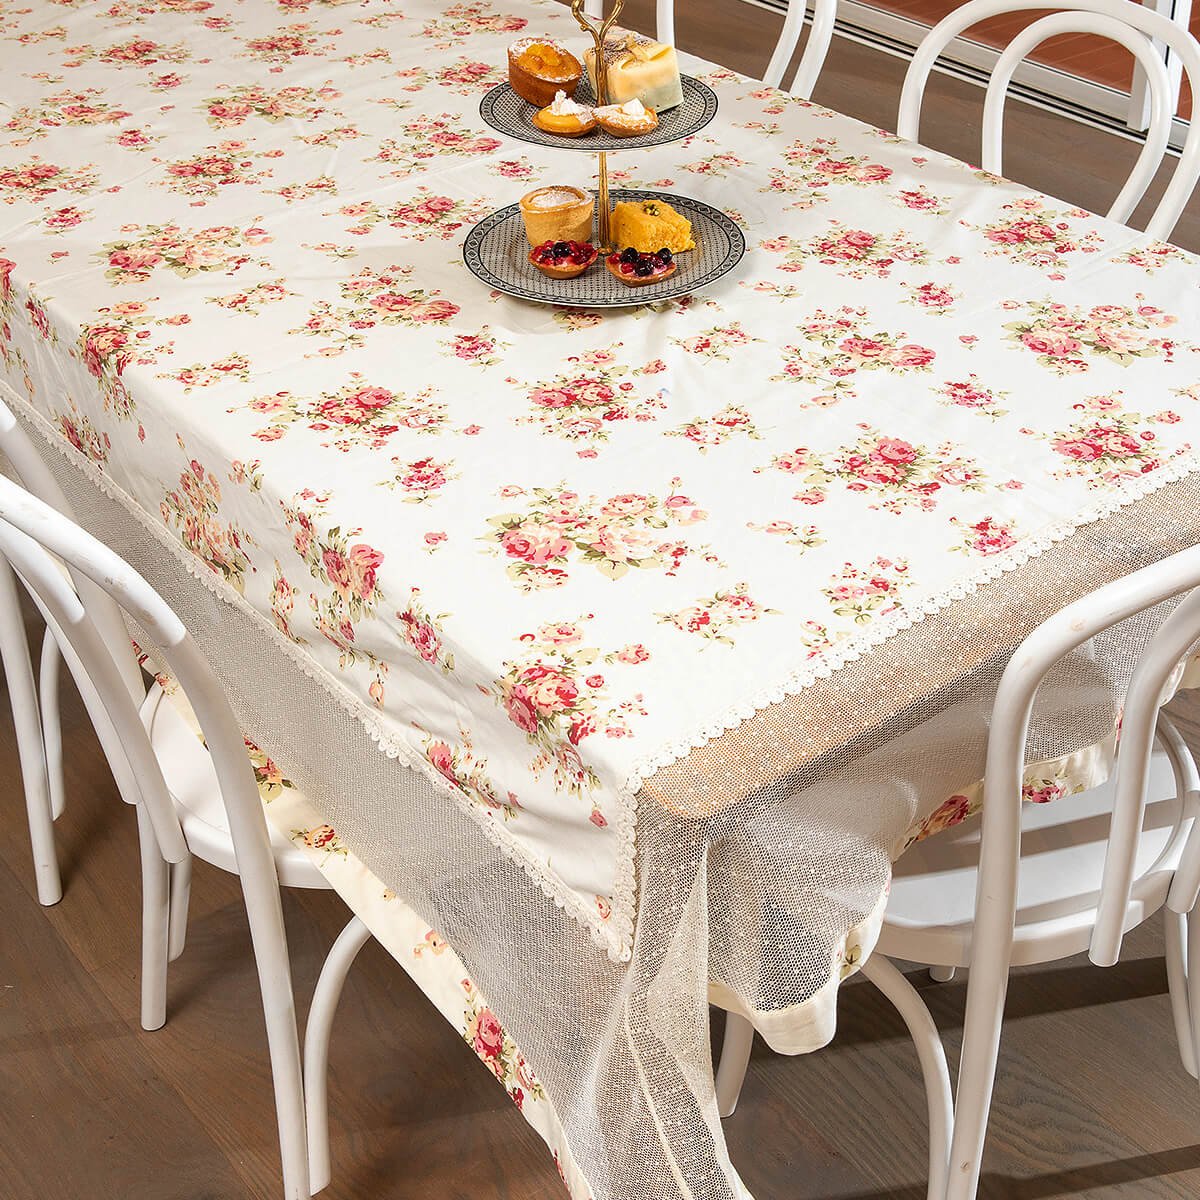 Cath Kidston Rectangular Tablecloth - 270cm